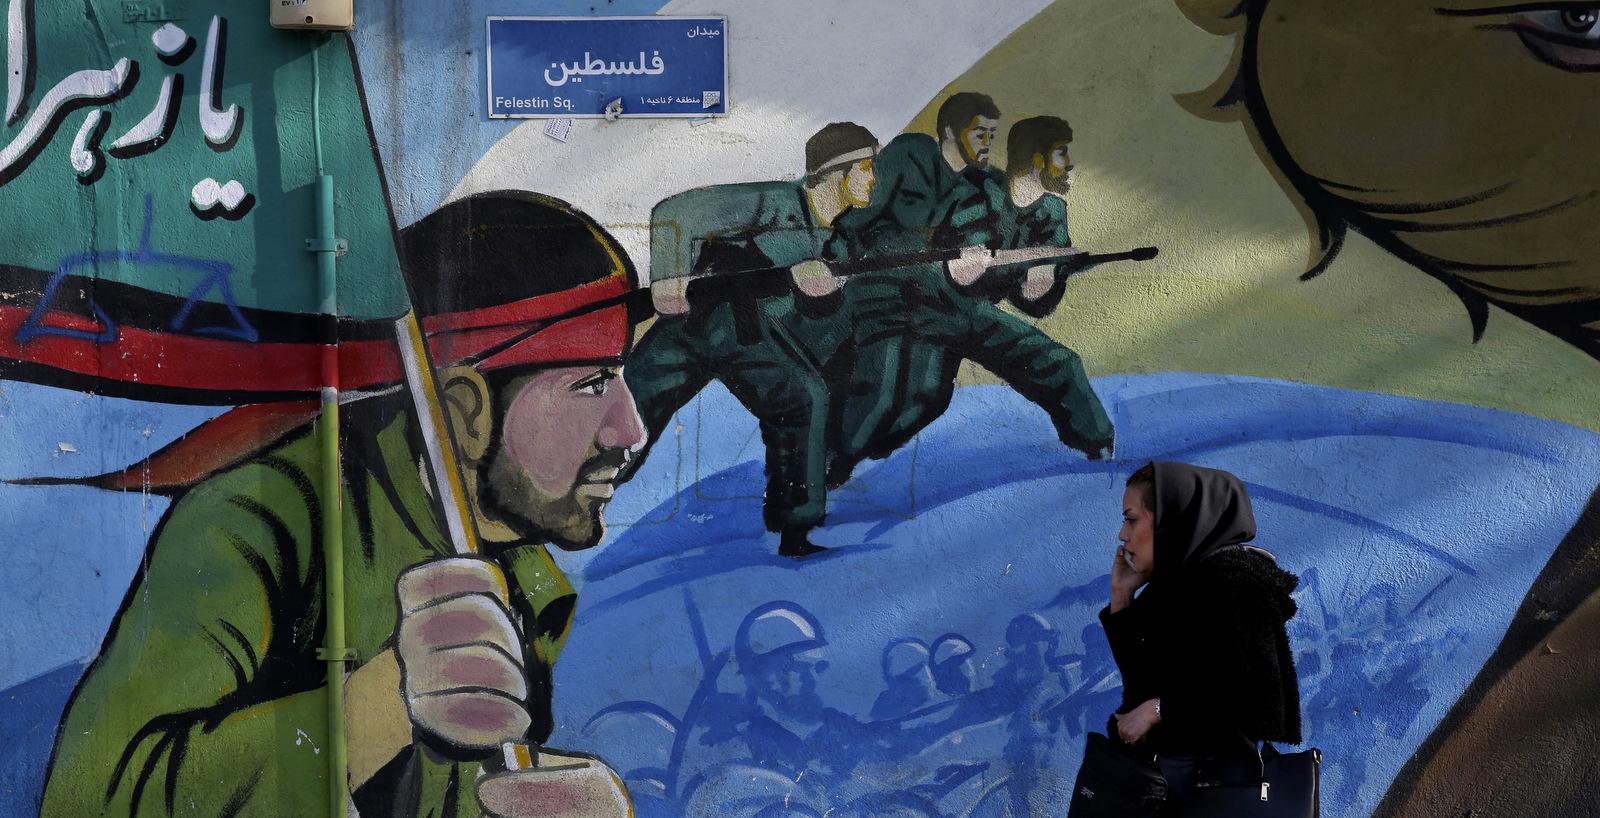 An Iranian woman walks past a mural depicting Iranian armed forces in the battlefield, at Palestine Sq. in Tehran, Iran, Jan. 16, 2016. (AP/Vahid Salemi)